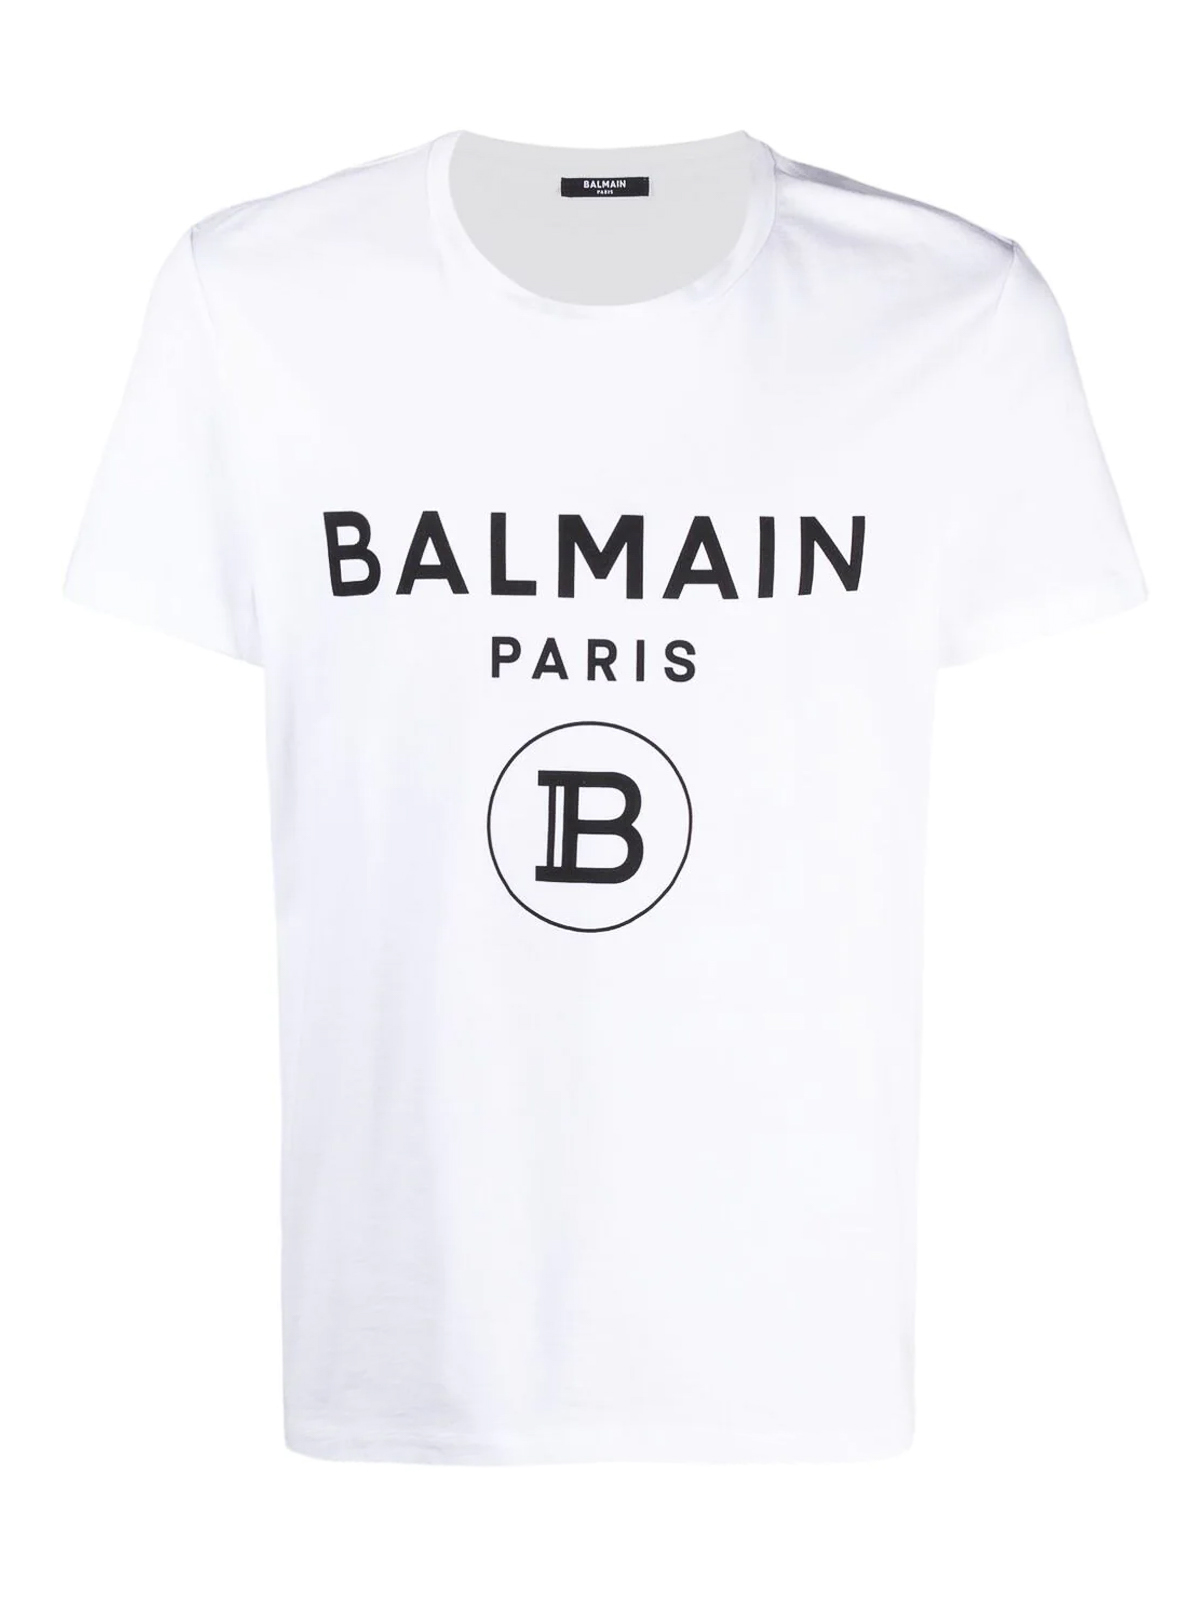 Tシャツ Balmain - Tシャツ - 白 - VH0EF000B029GAB | THEBS